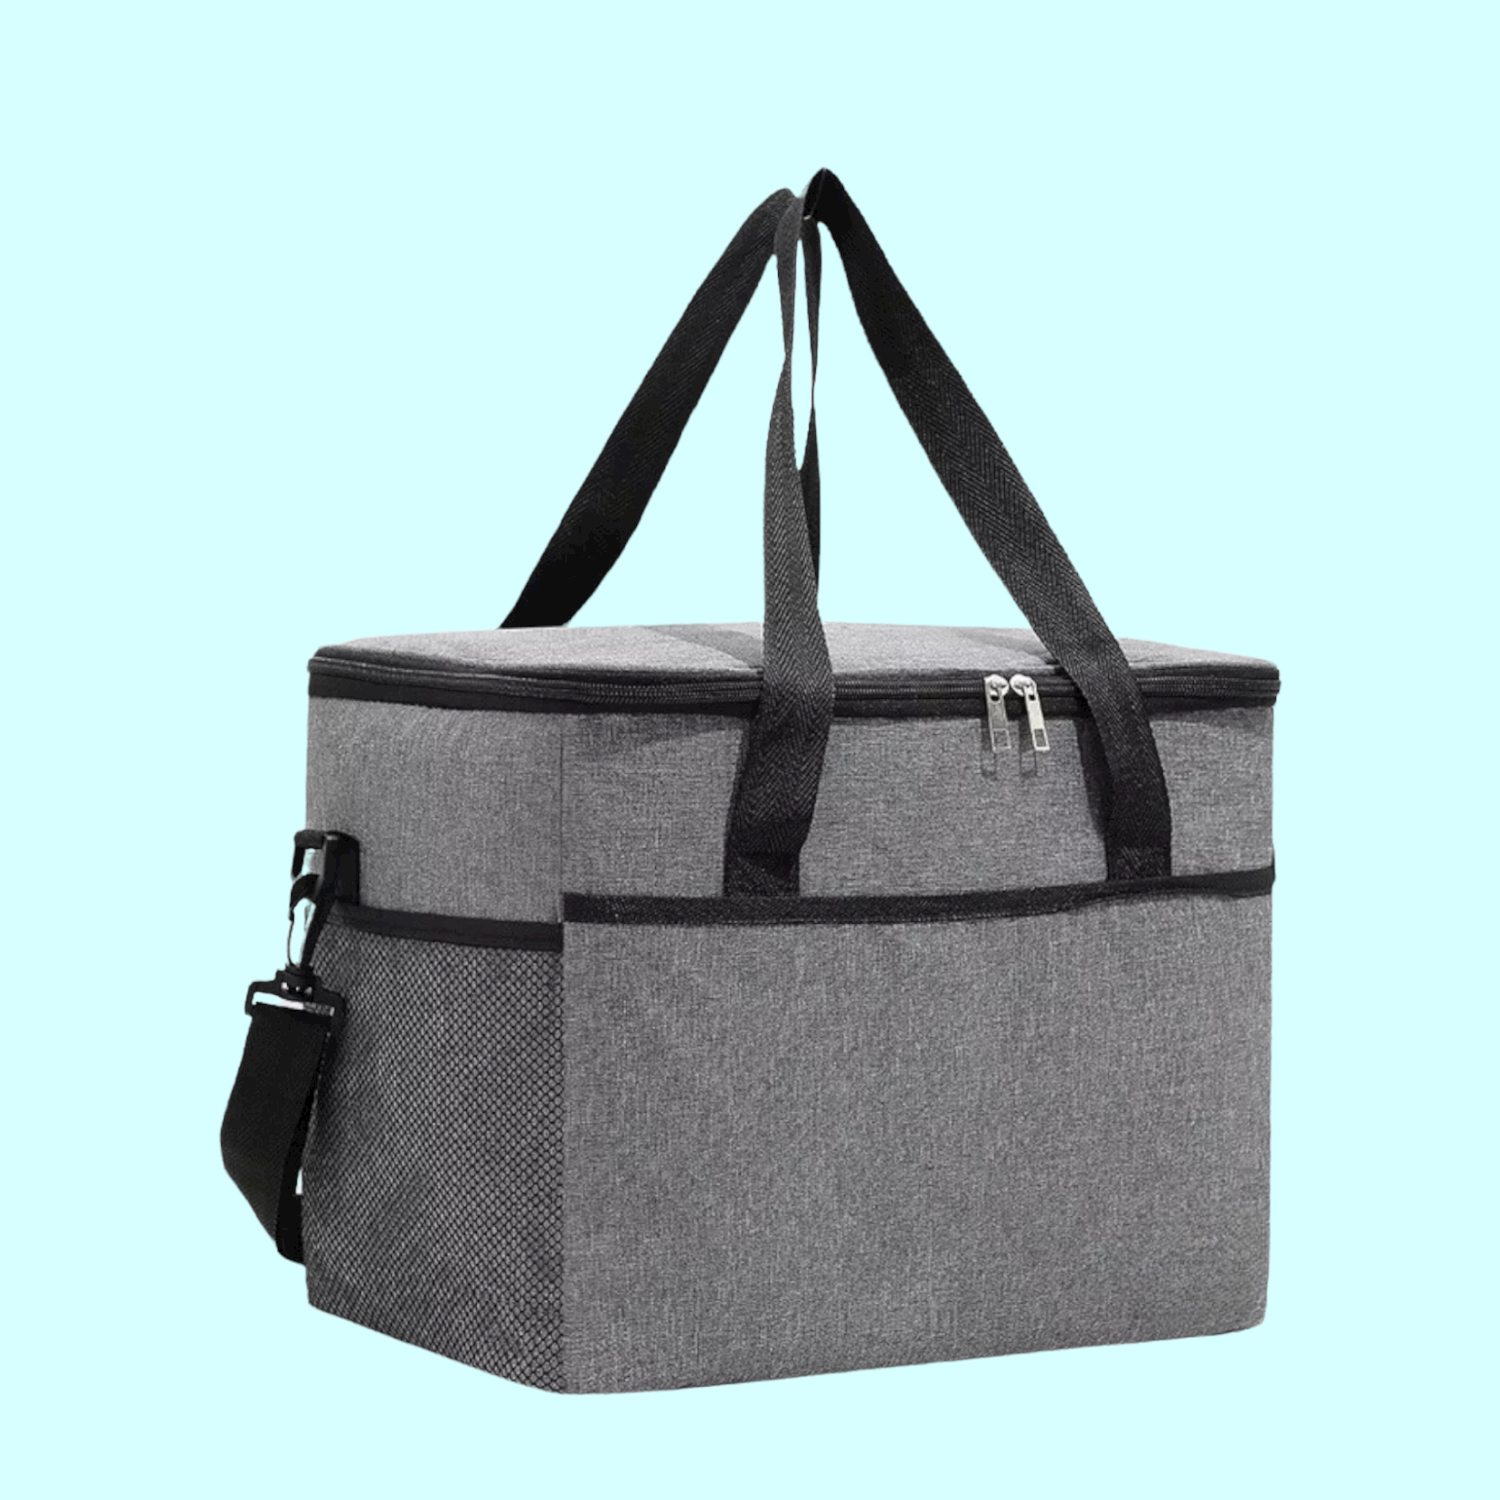 Eco friendly cooler bags - Directecogreen